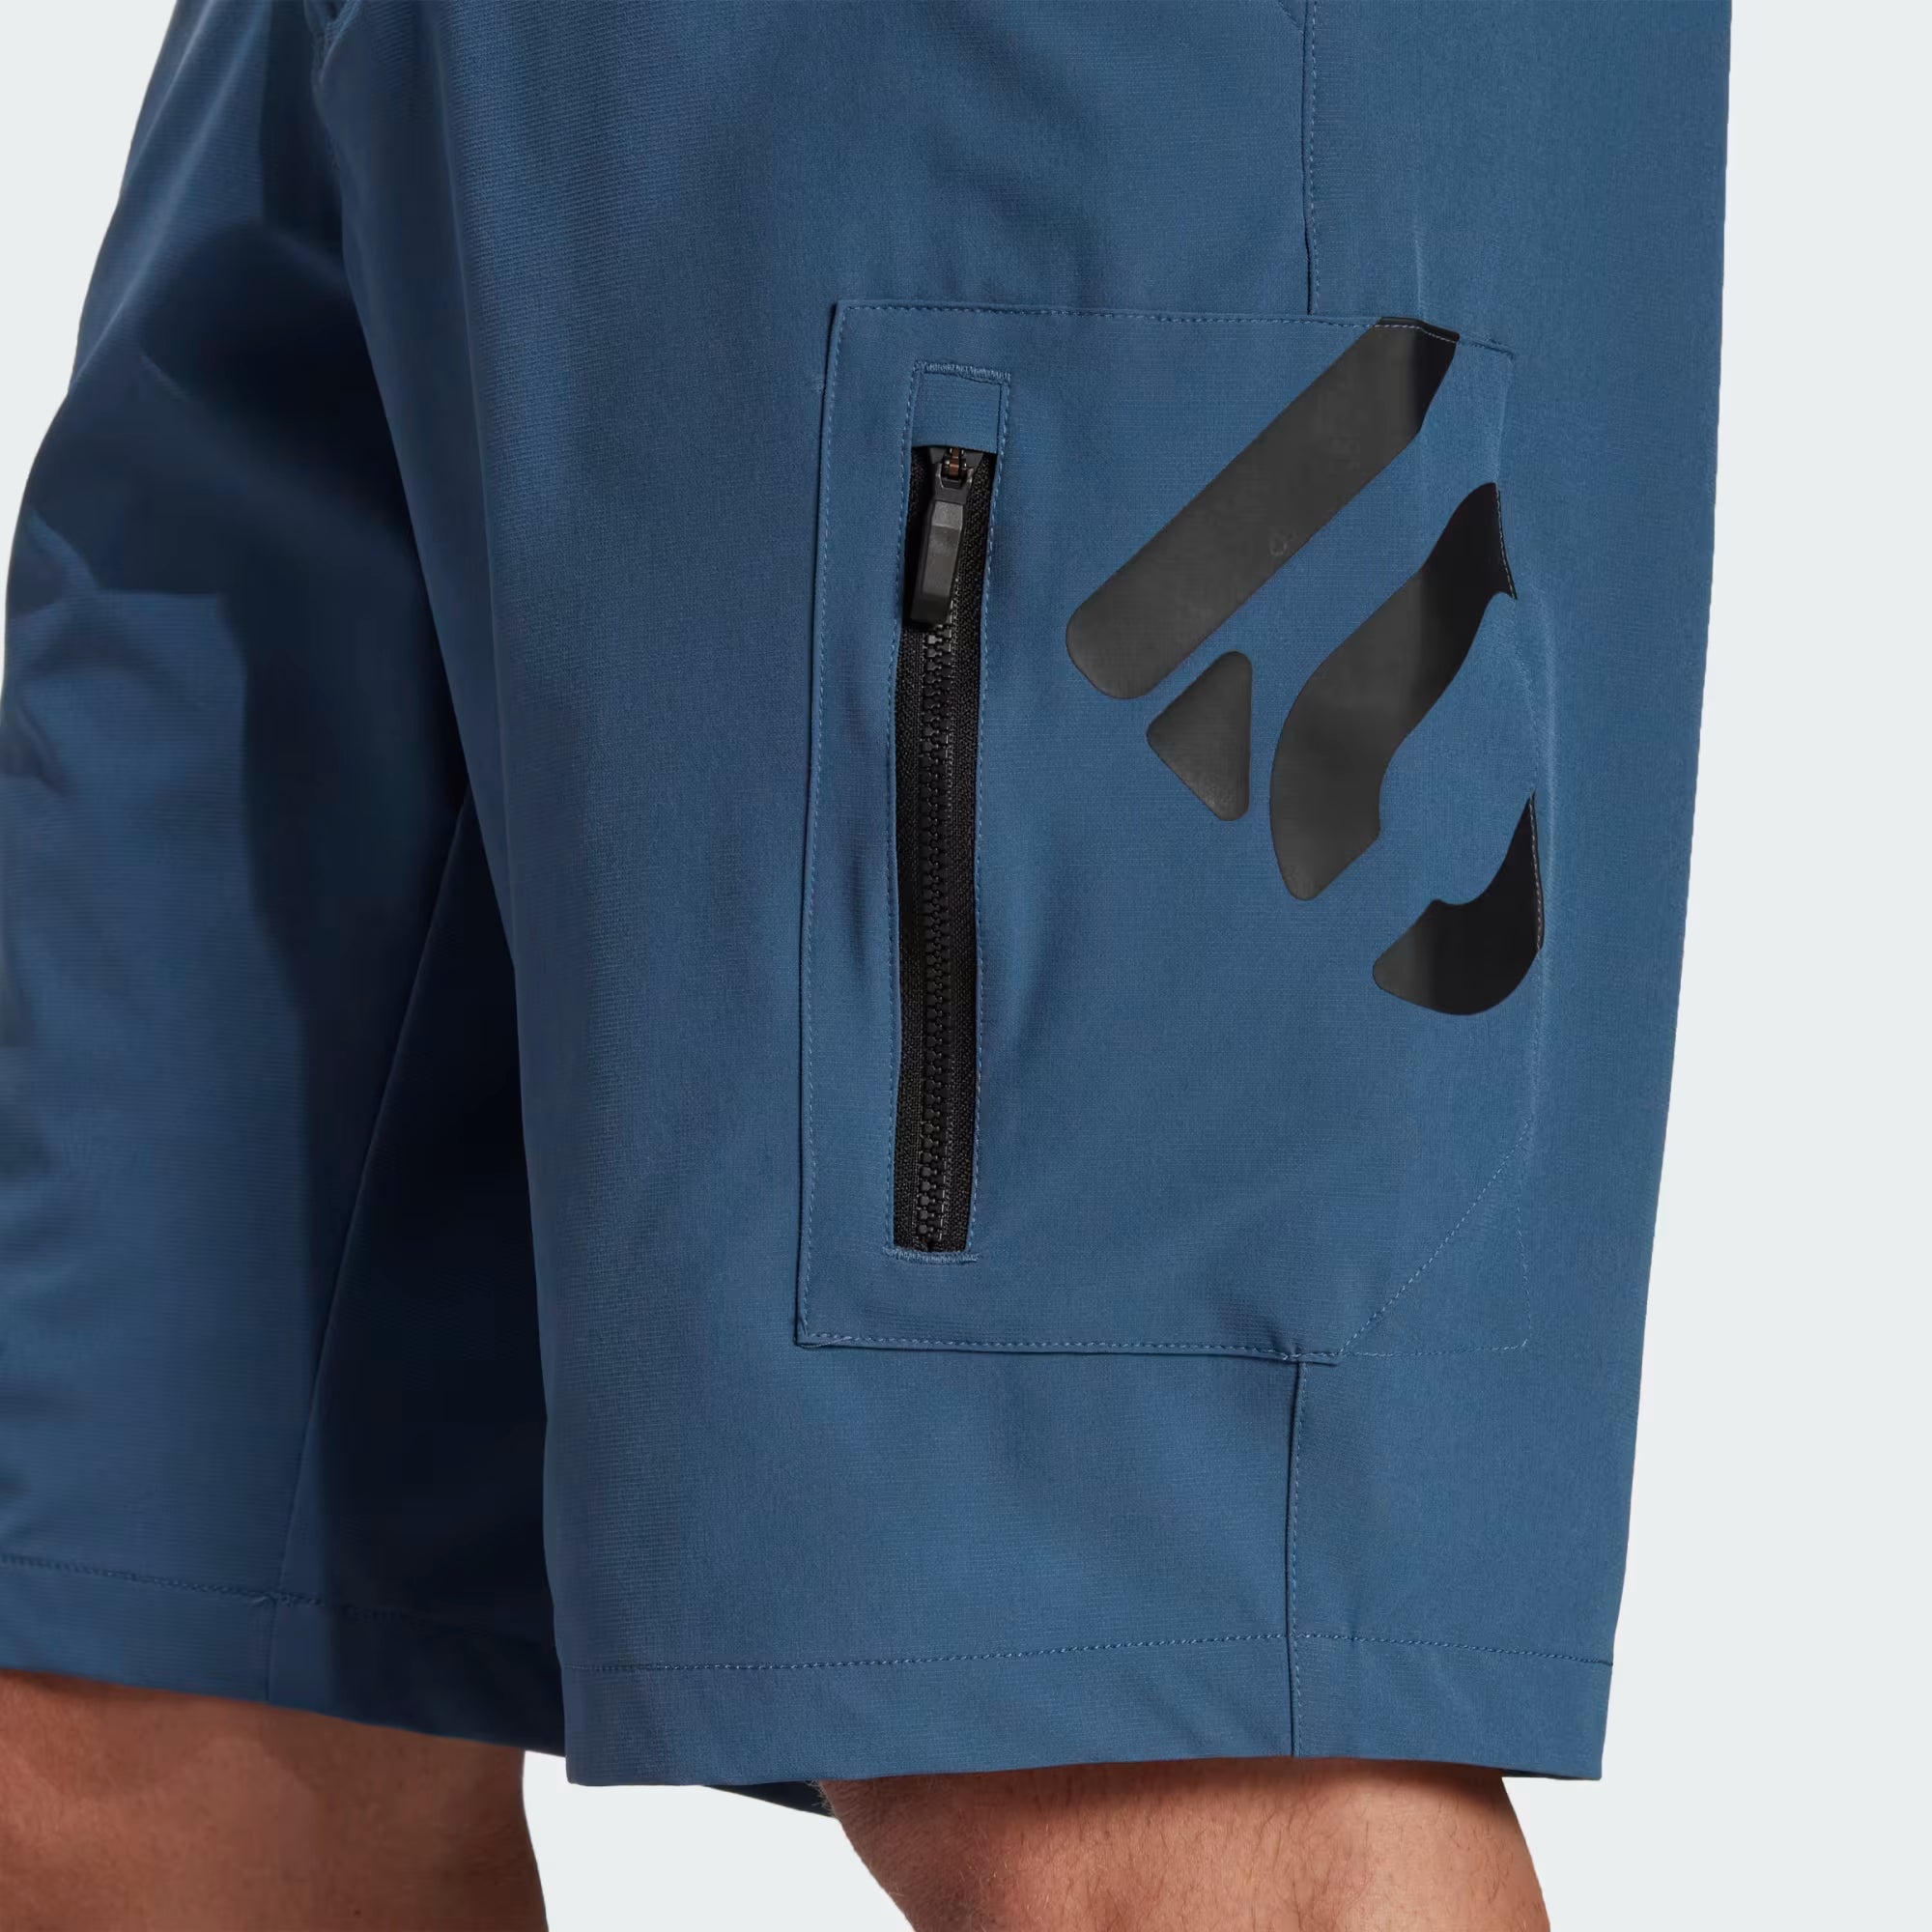 Adidas Five Ten Brand Ofthe Brave Shorts - Men